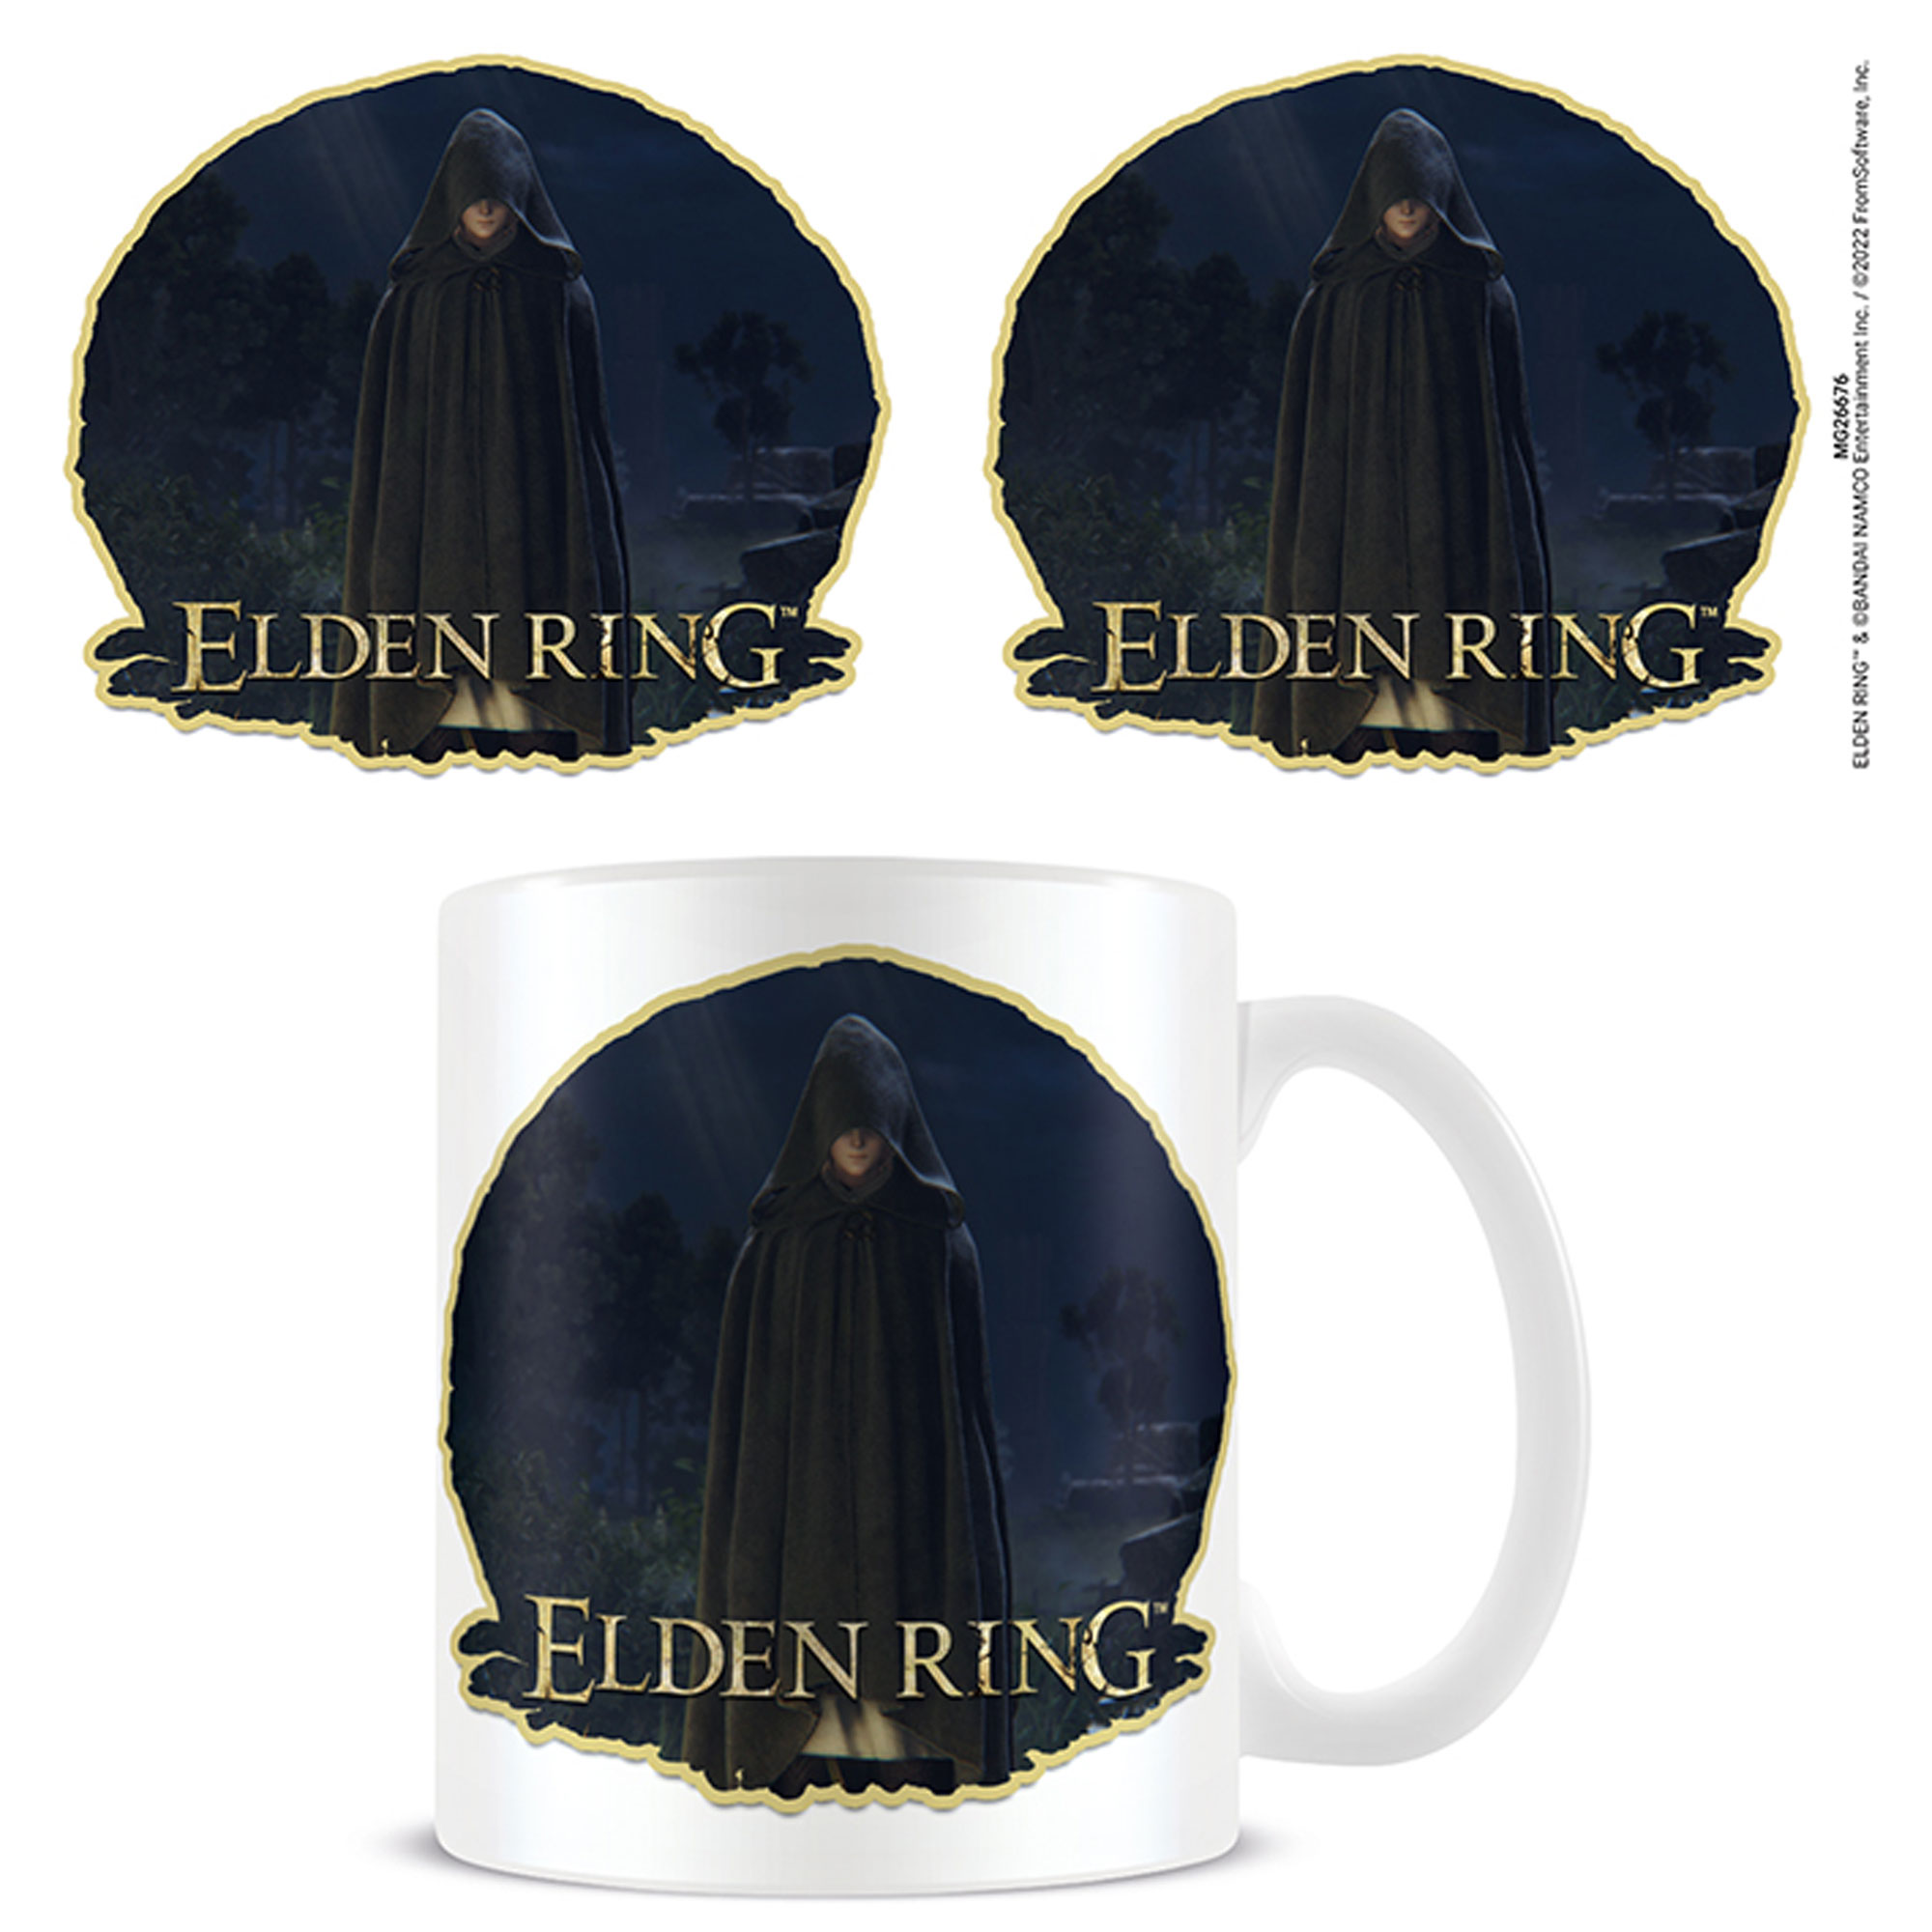 Elden Ring - Weathered Relic